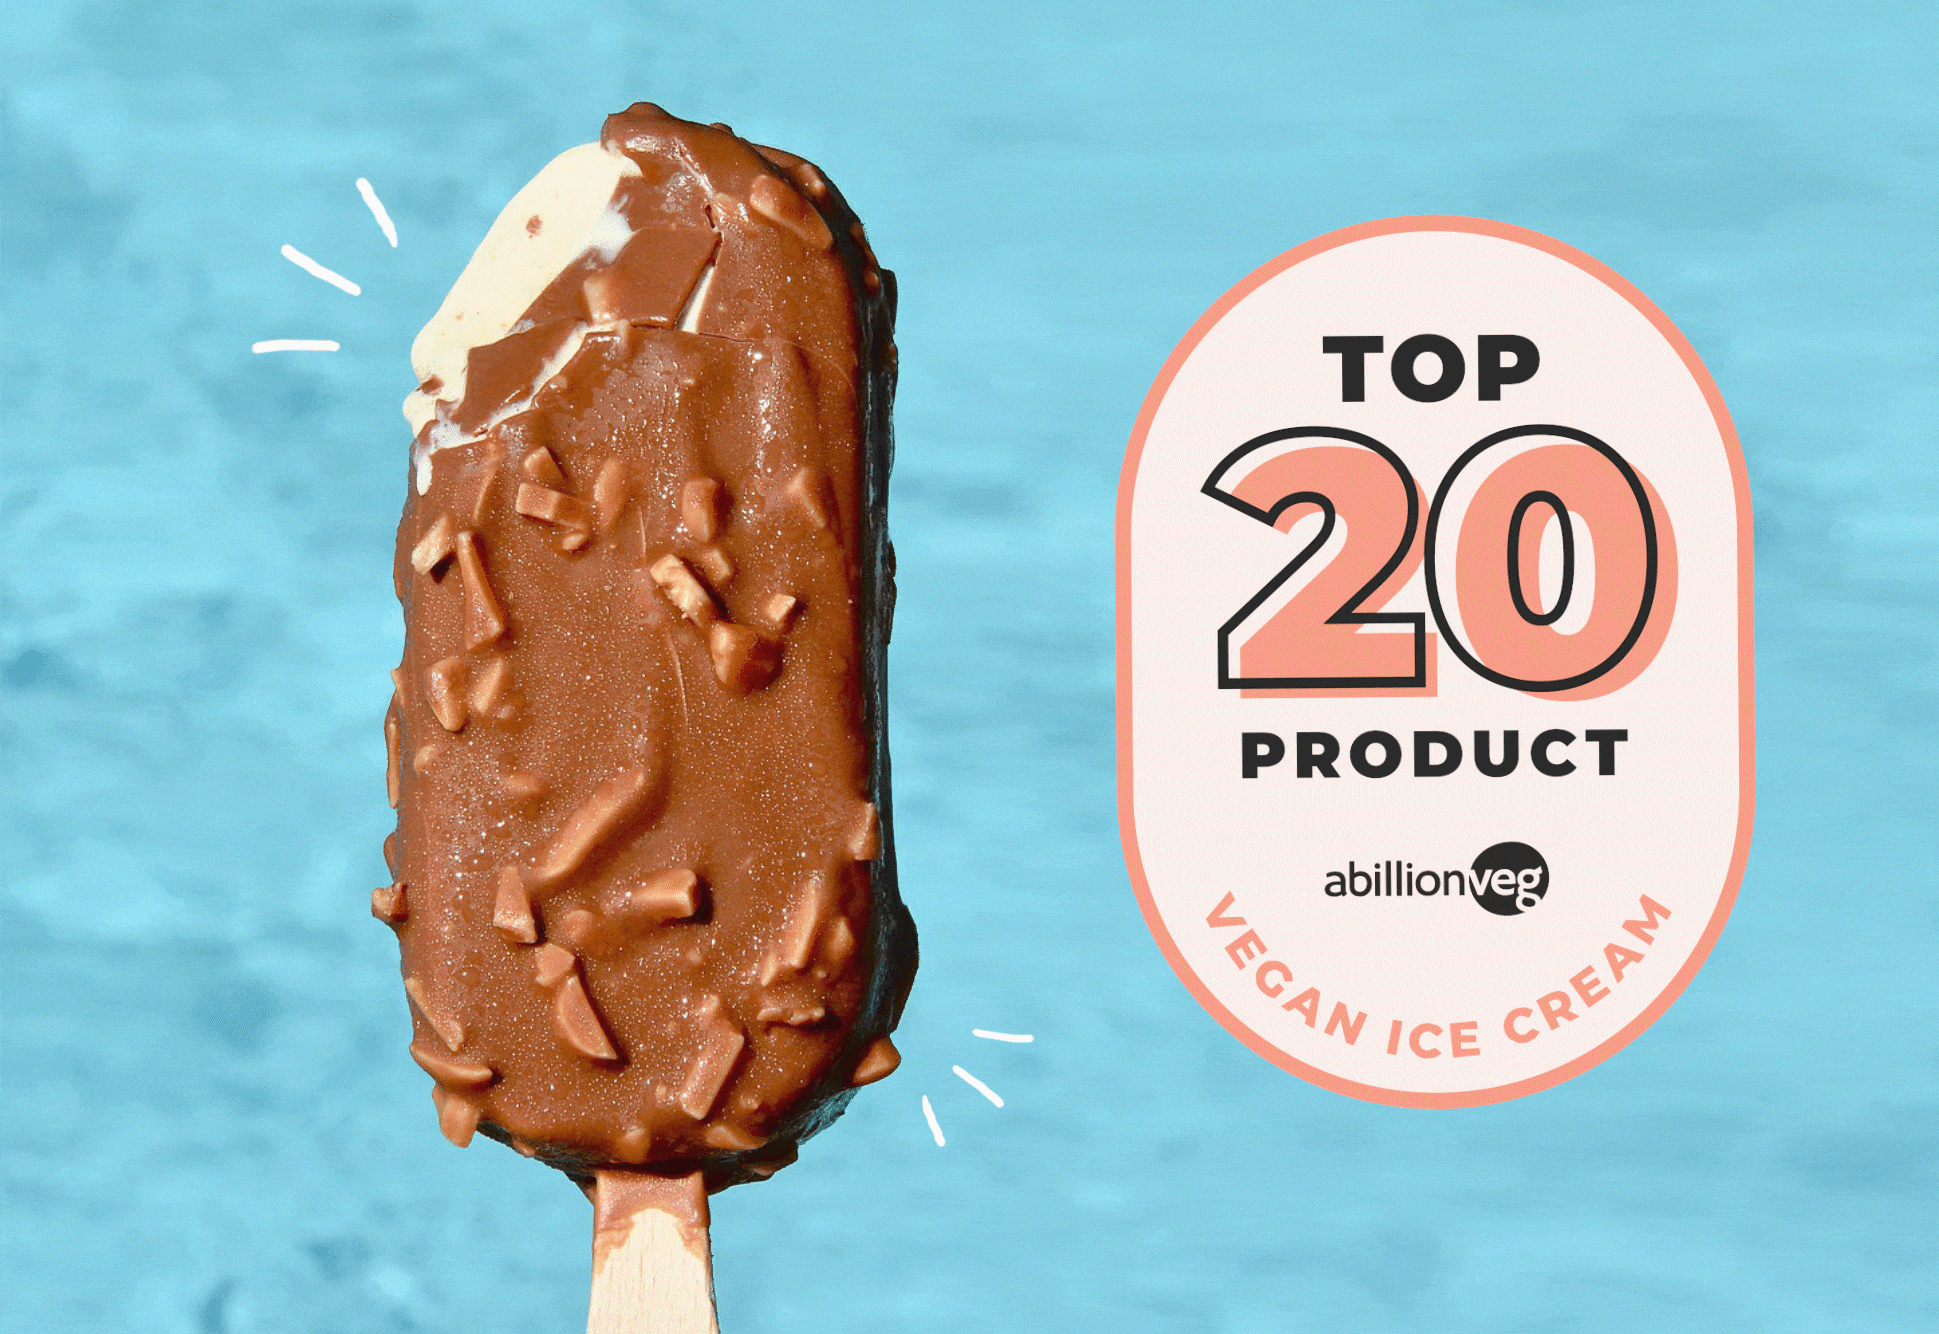 abillionveg's Top 20 Vegan Ice Cream Awards 2020 